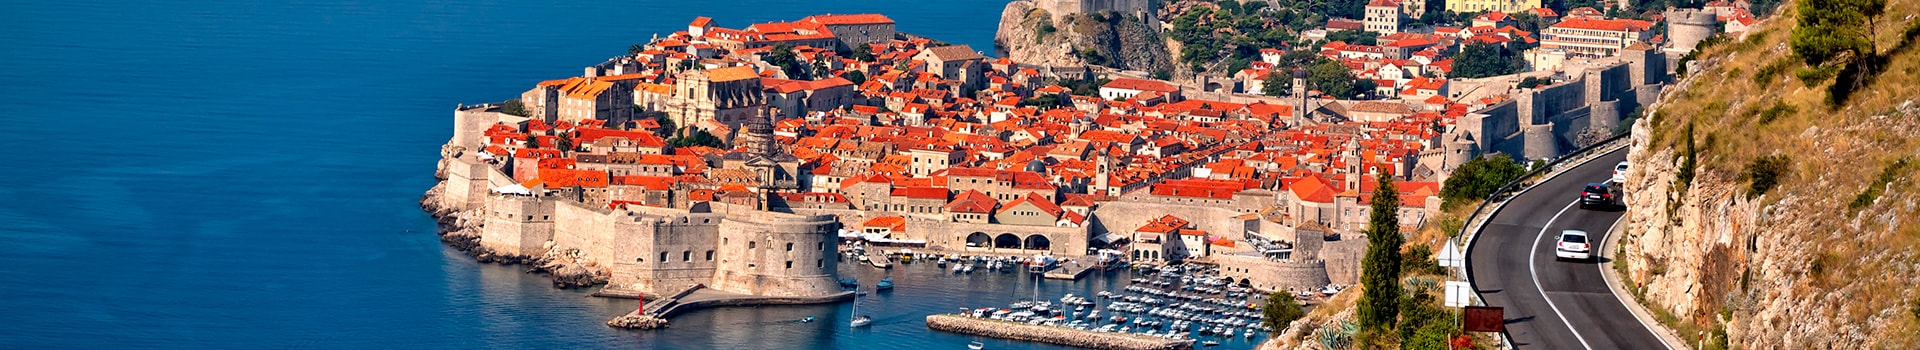 Amesterdao - Dubrovnik